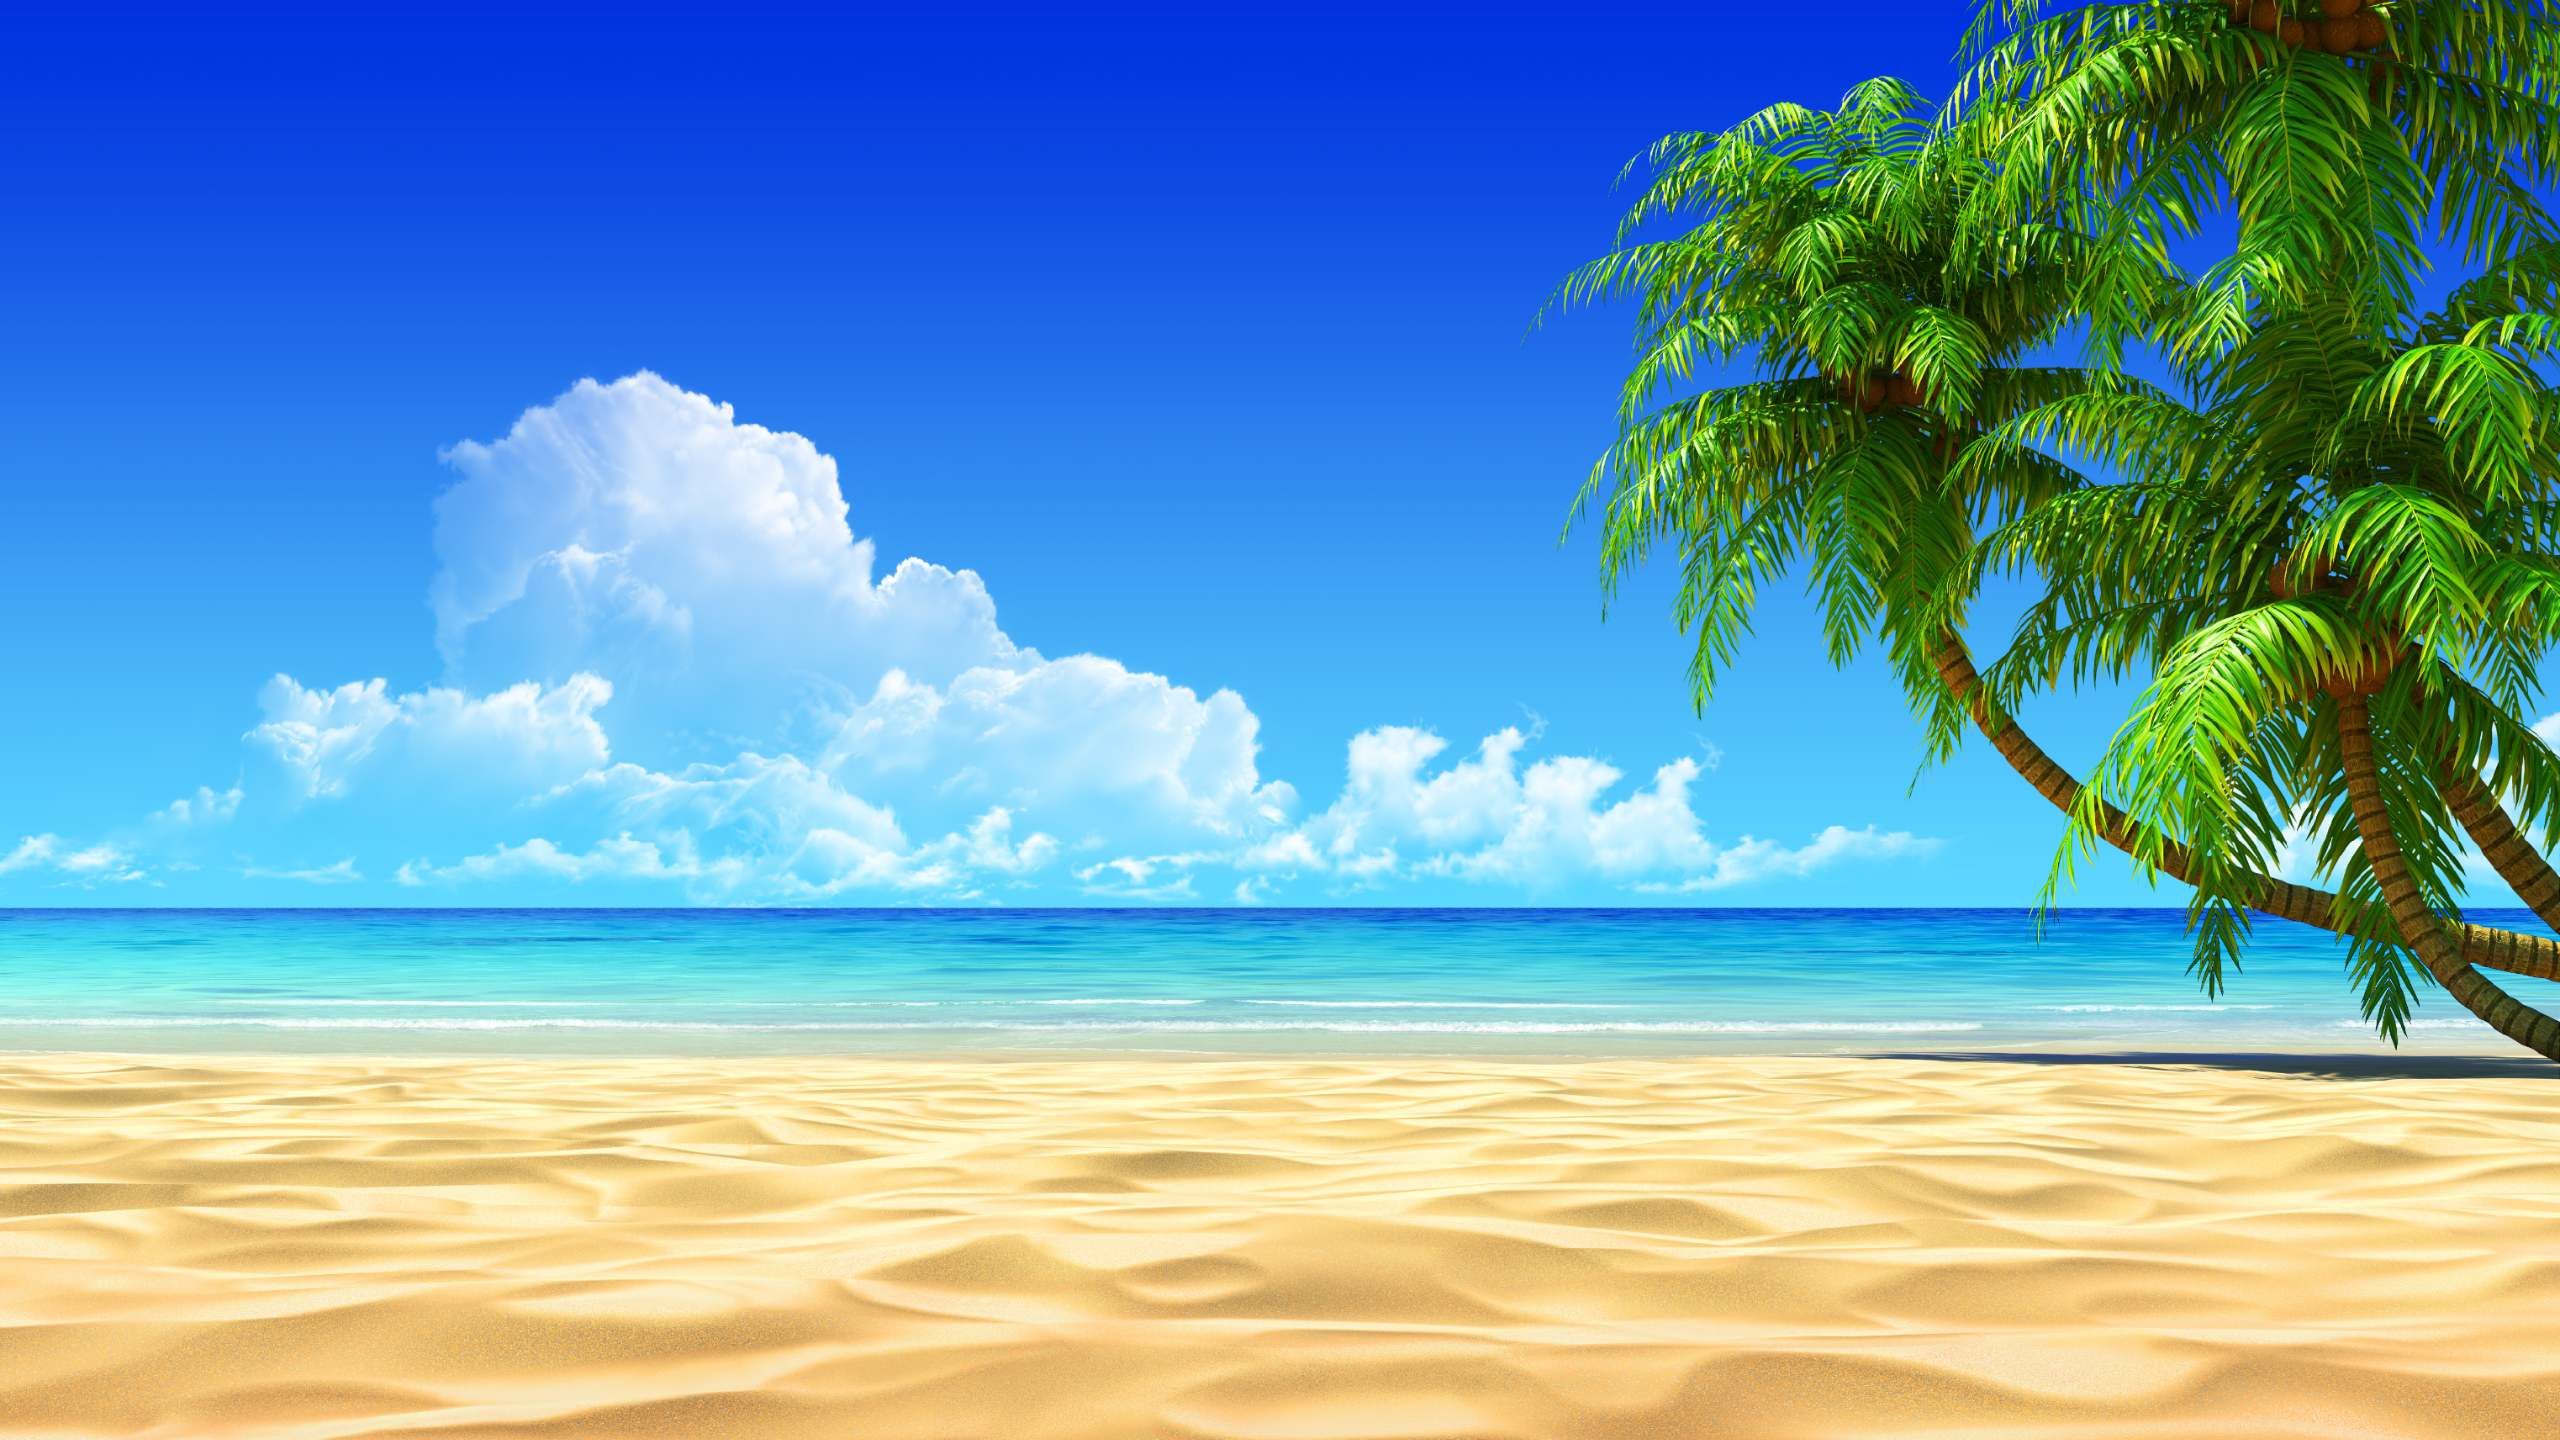 Widescreen Wallpaper S Awesome Tropical Beach Desktop